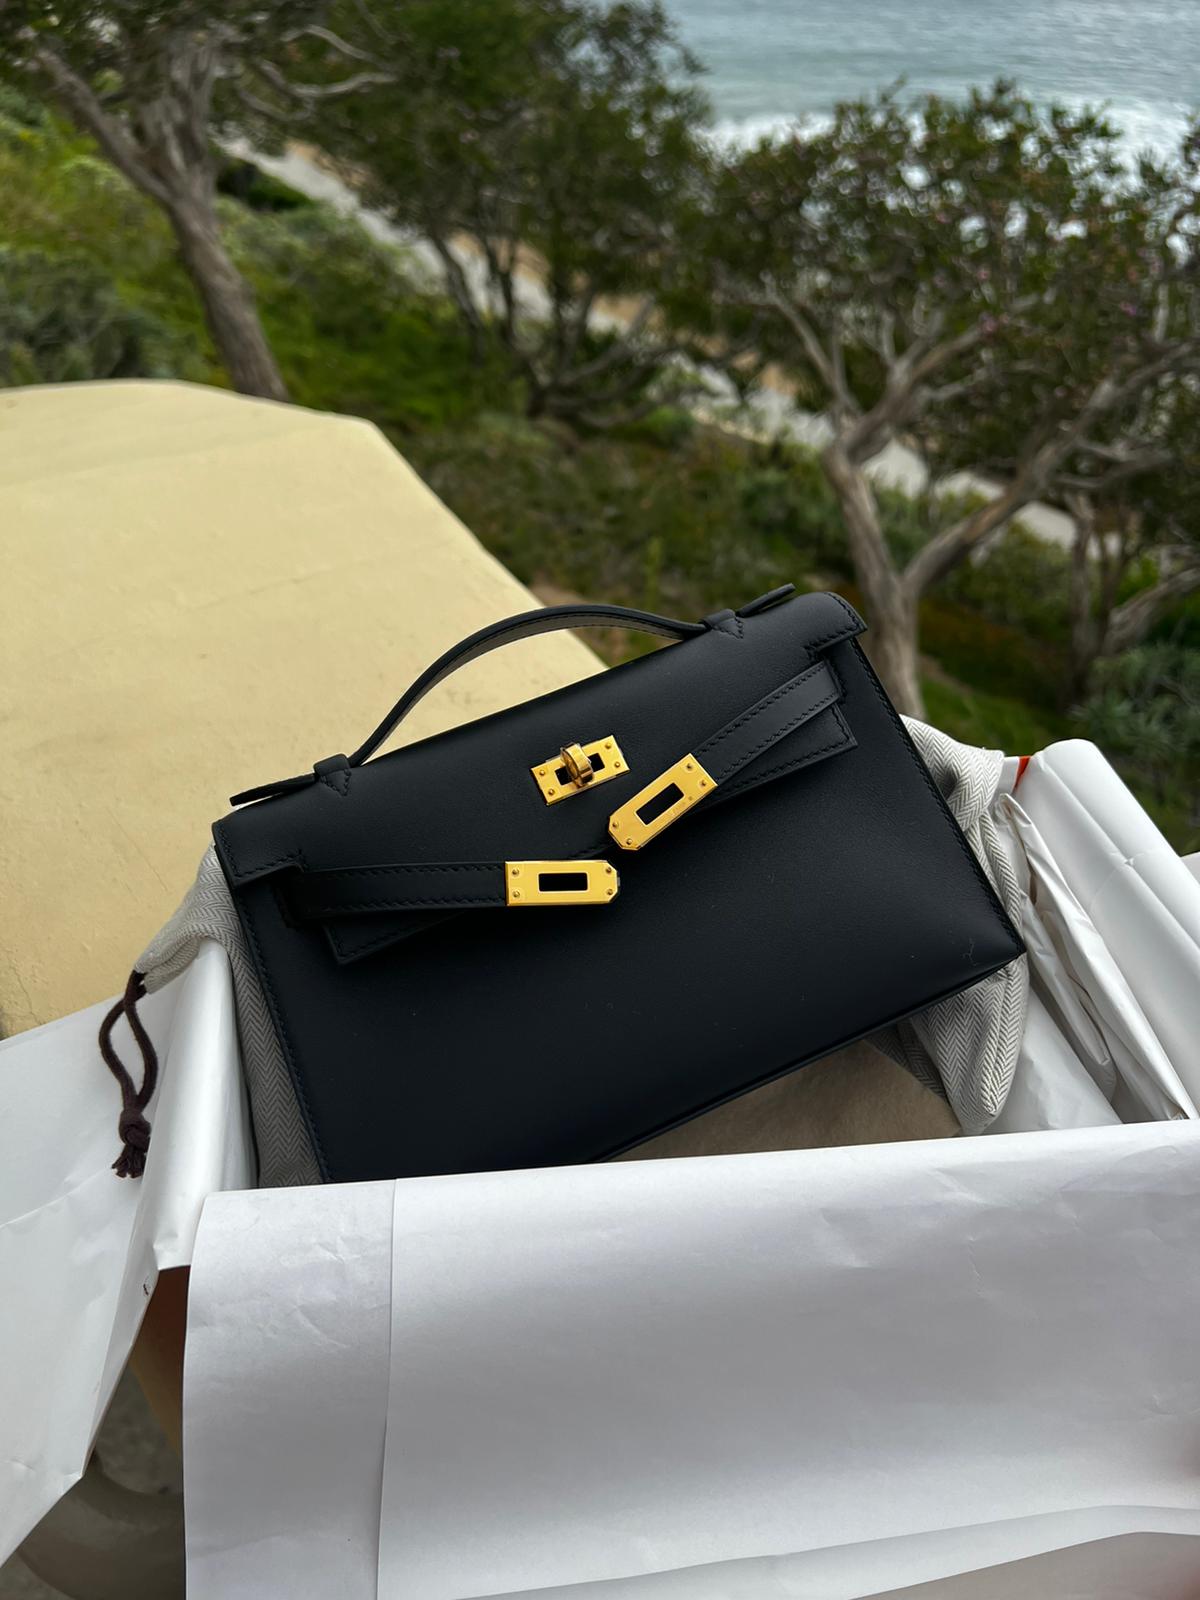 Hermès PRICE INCREASE 📈📈 - PREDICTIONS AND TOP PICS Hermès Handbag Hermès  Birkin Kelly Pricing 